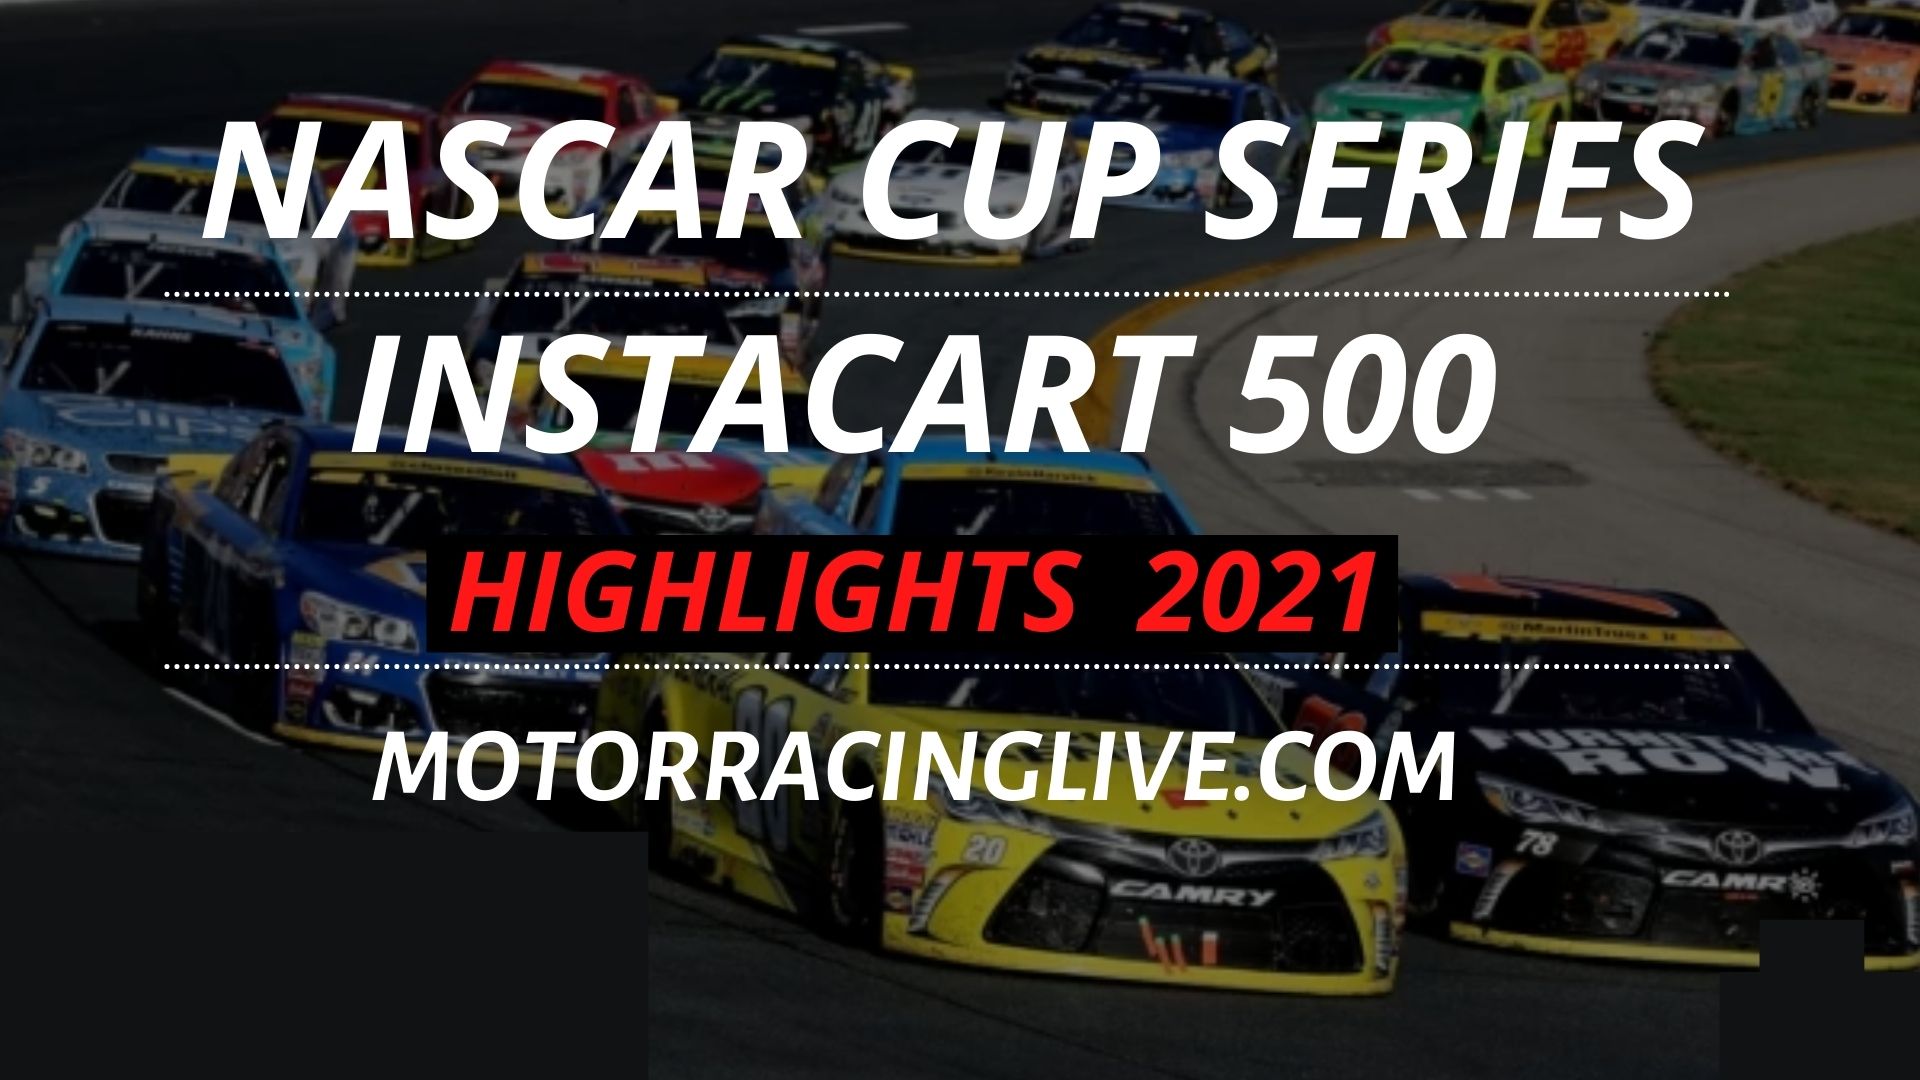 Instacart 500 Highlights 2021 NASCAR Cup Series